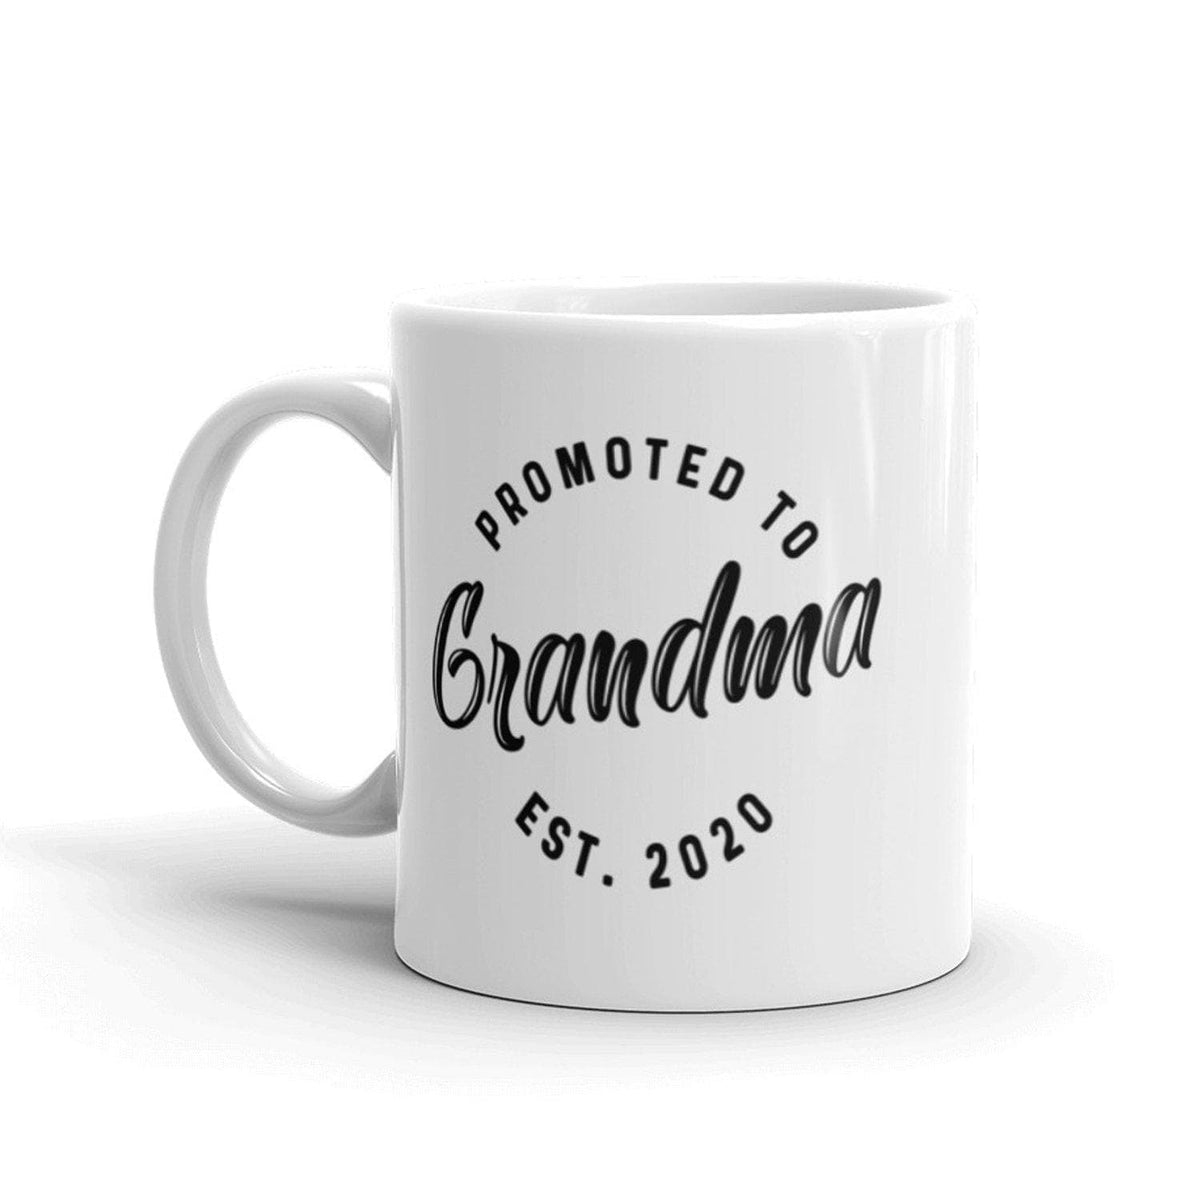 Promoted To Grandma 2020 Mug - Crazy Dog T-Shirts